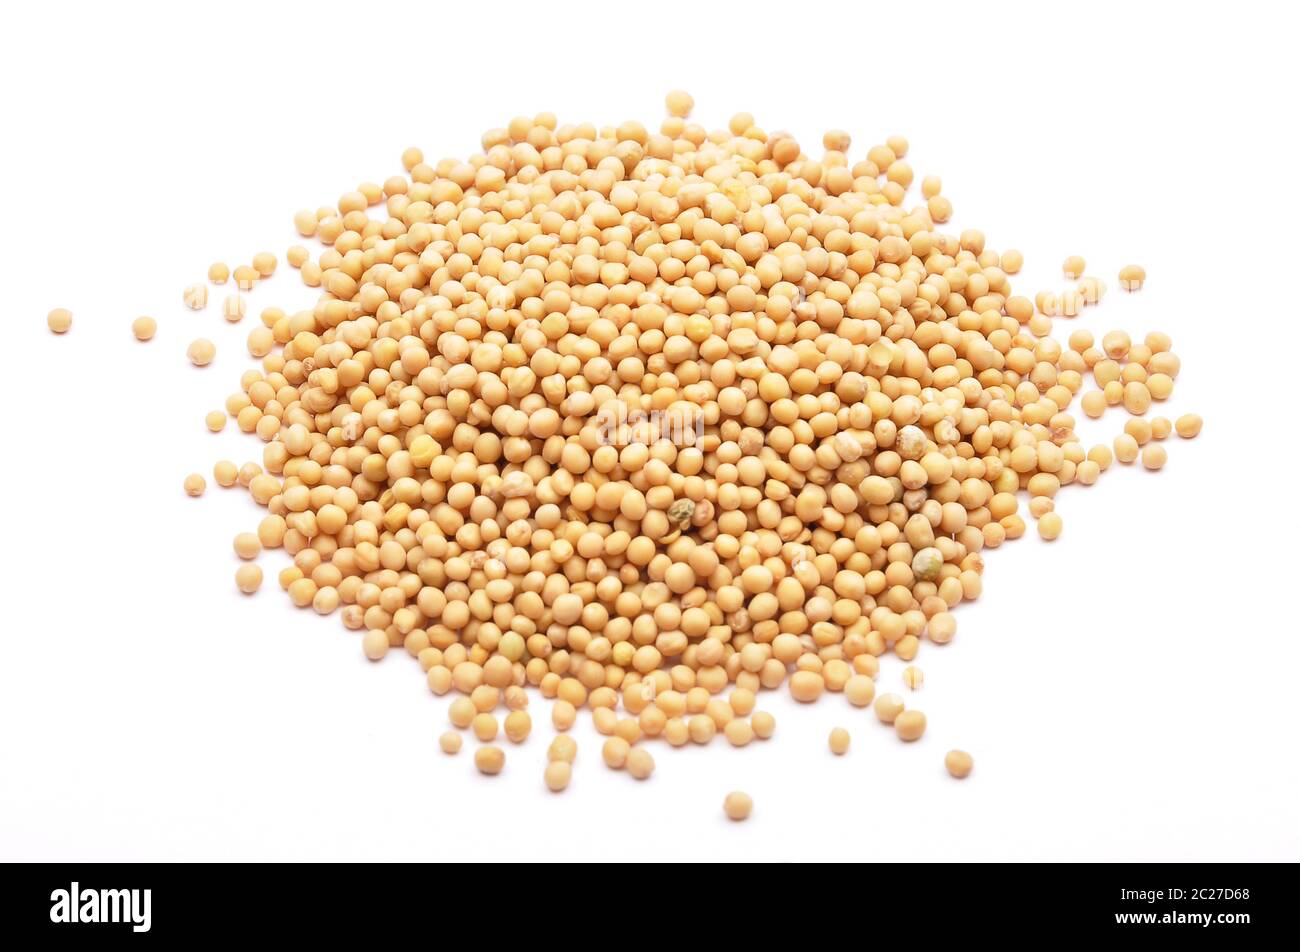 Mustard seeds on white background Stock Photo